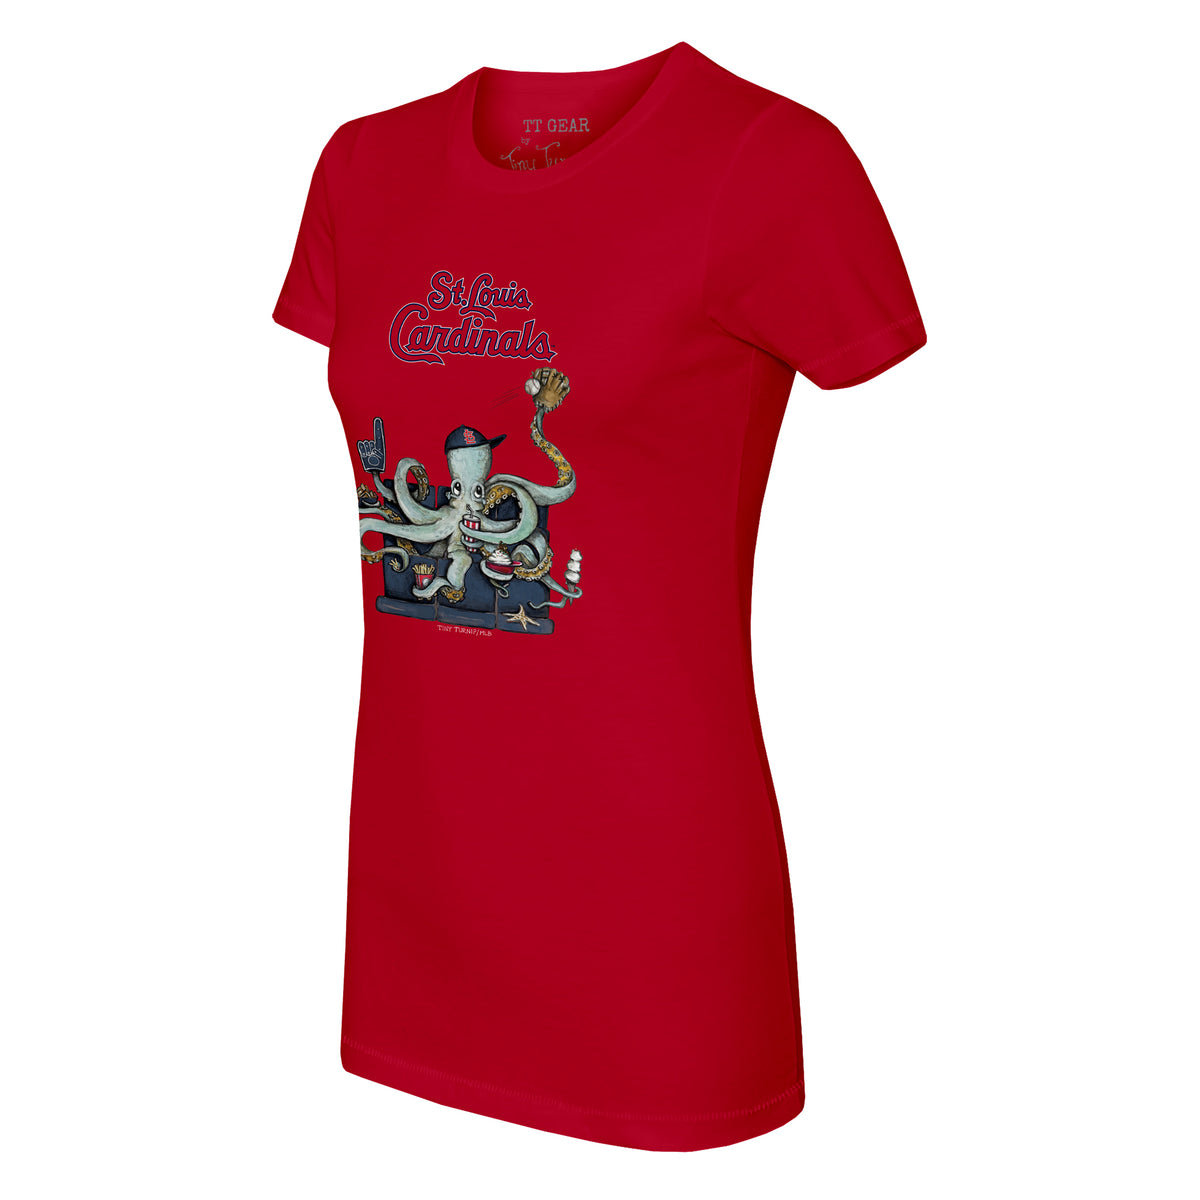 St. Louis Cardinals Octopus Tee Shirt